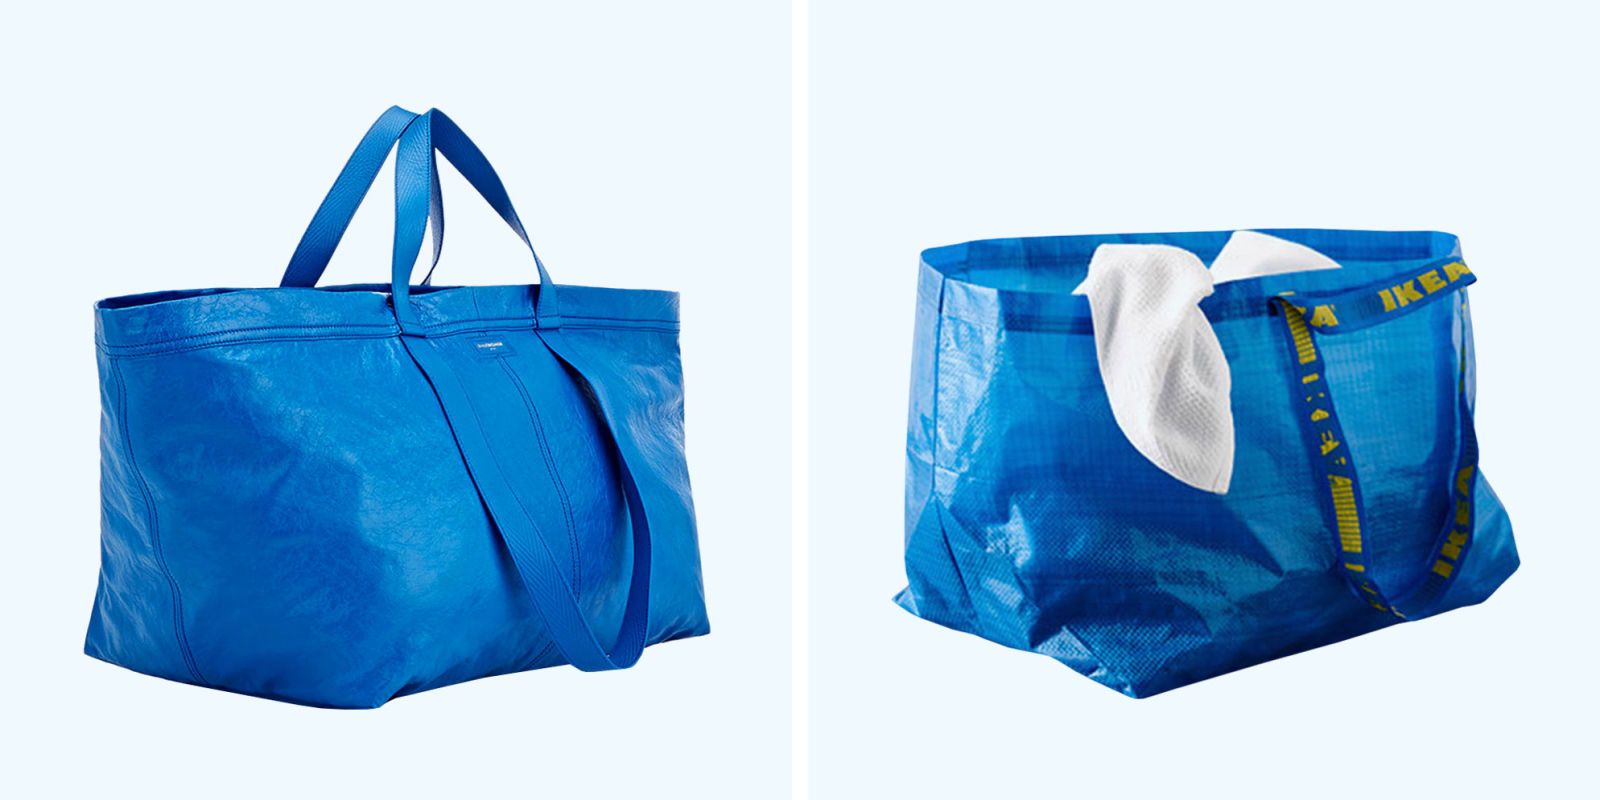 Balenciaga Designer Reveals Story Behind 2000 IkeaLike Bag